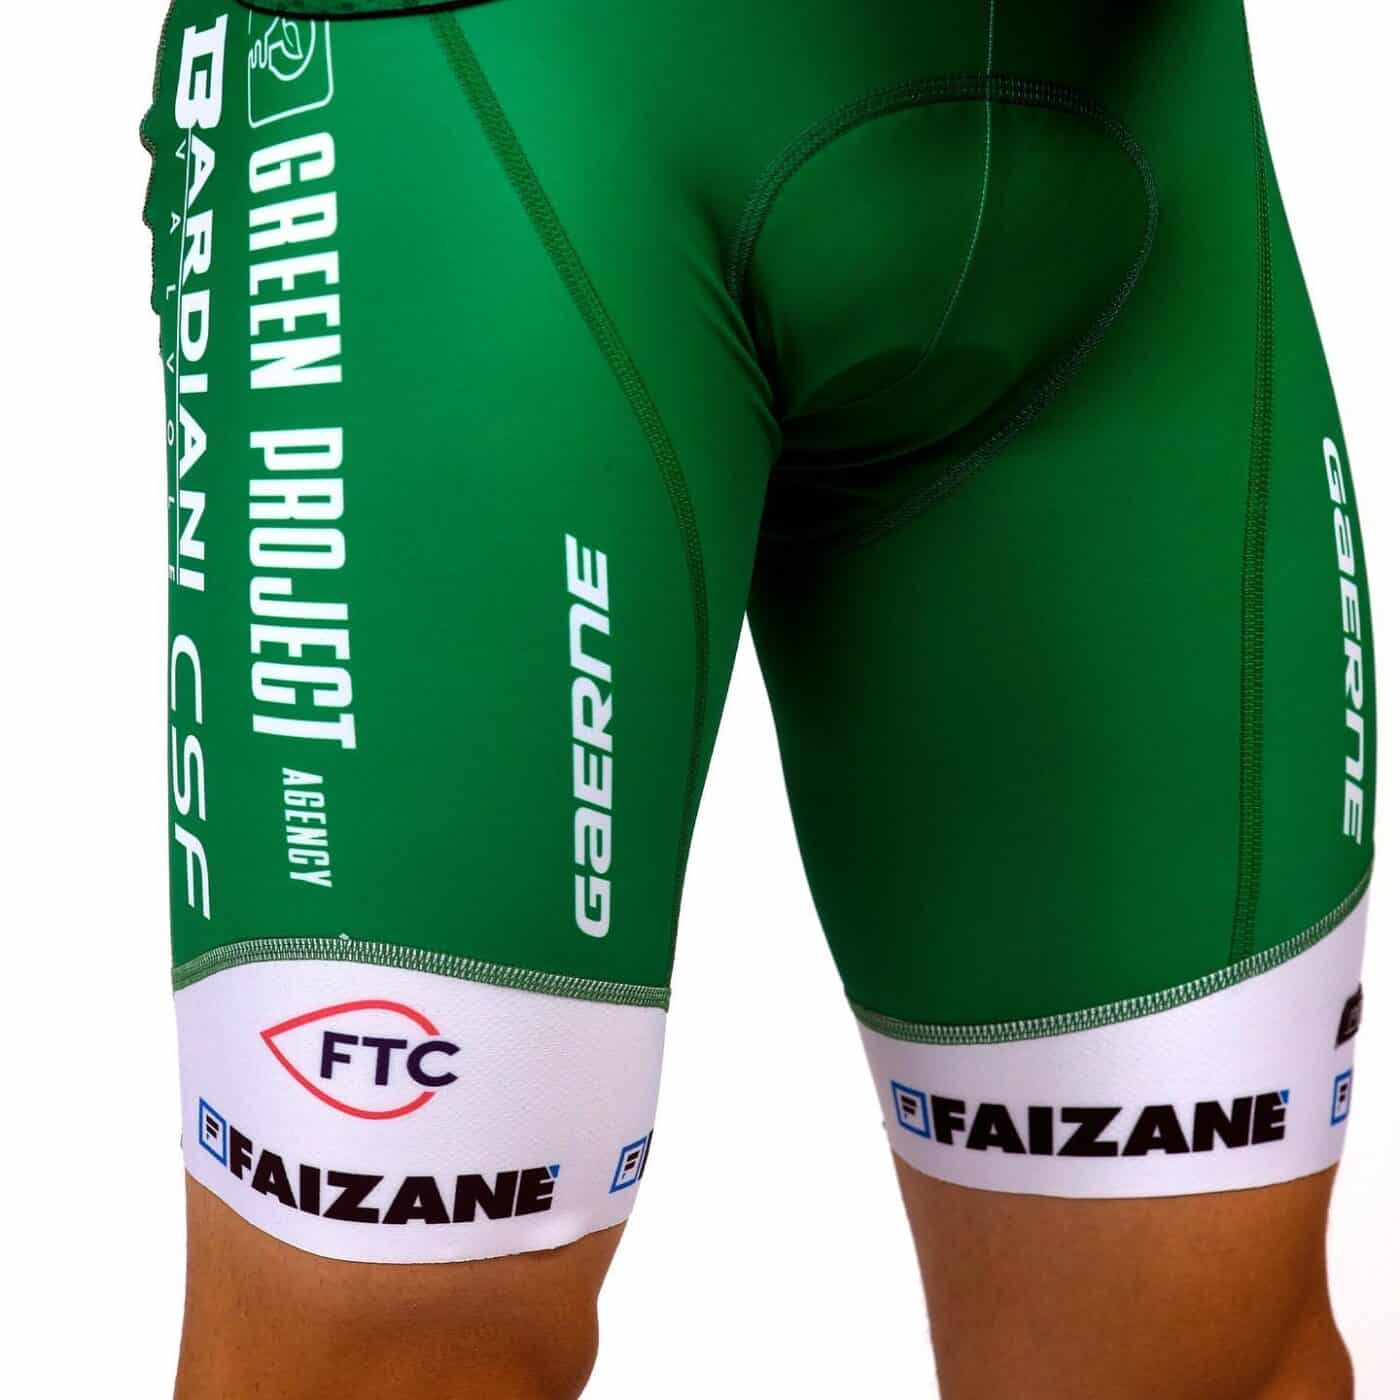 Le maillot 2023 de Green Project Bardiani CSF Faizane